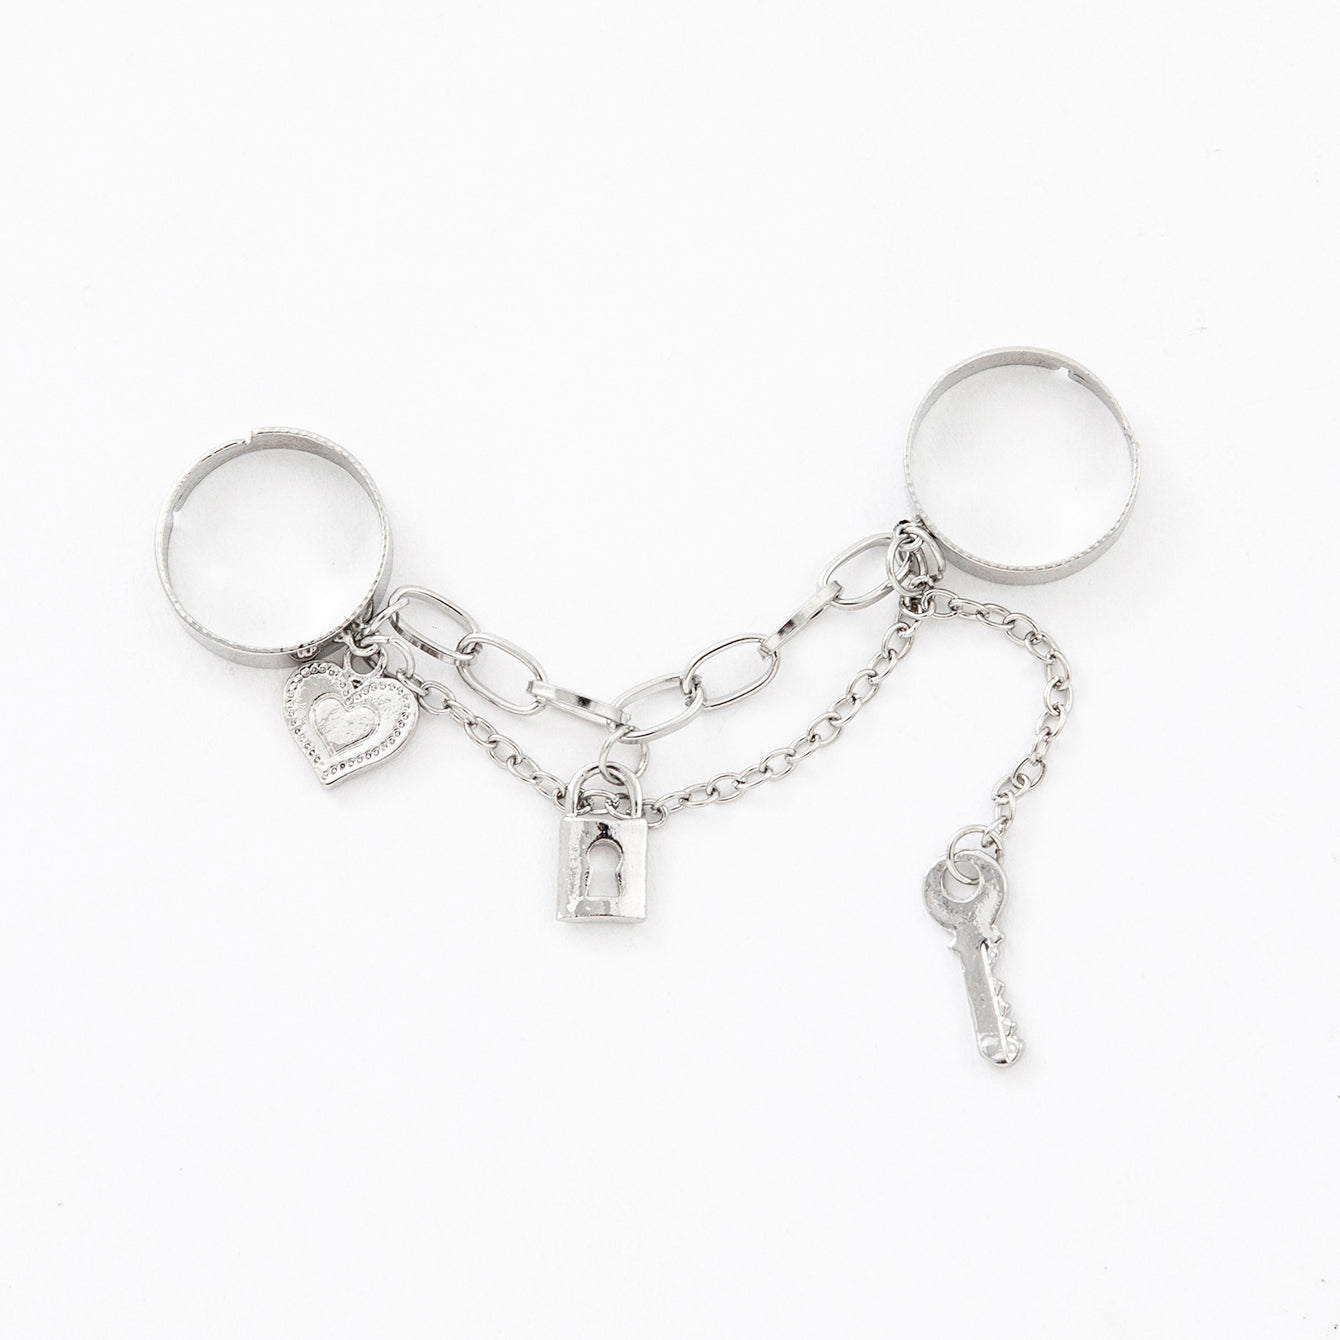 Chain Key Rings